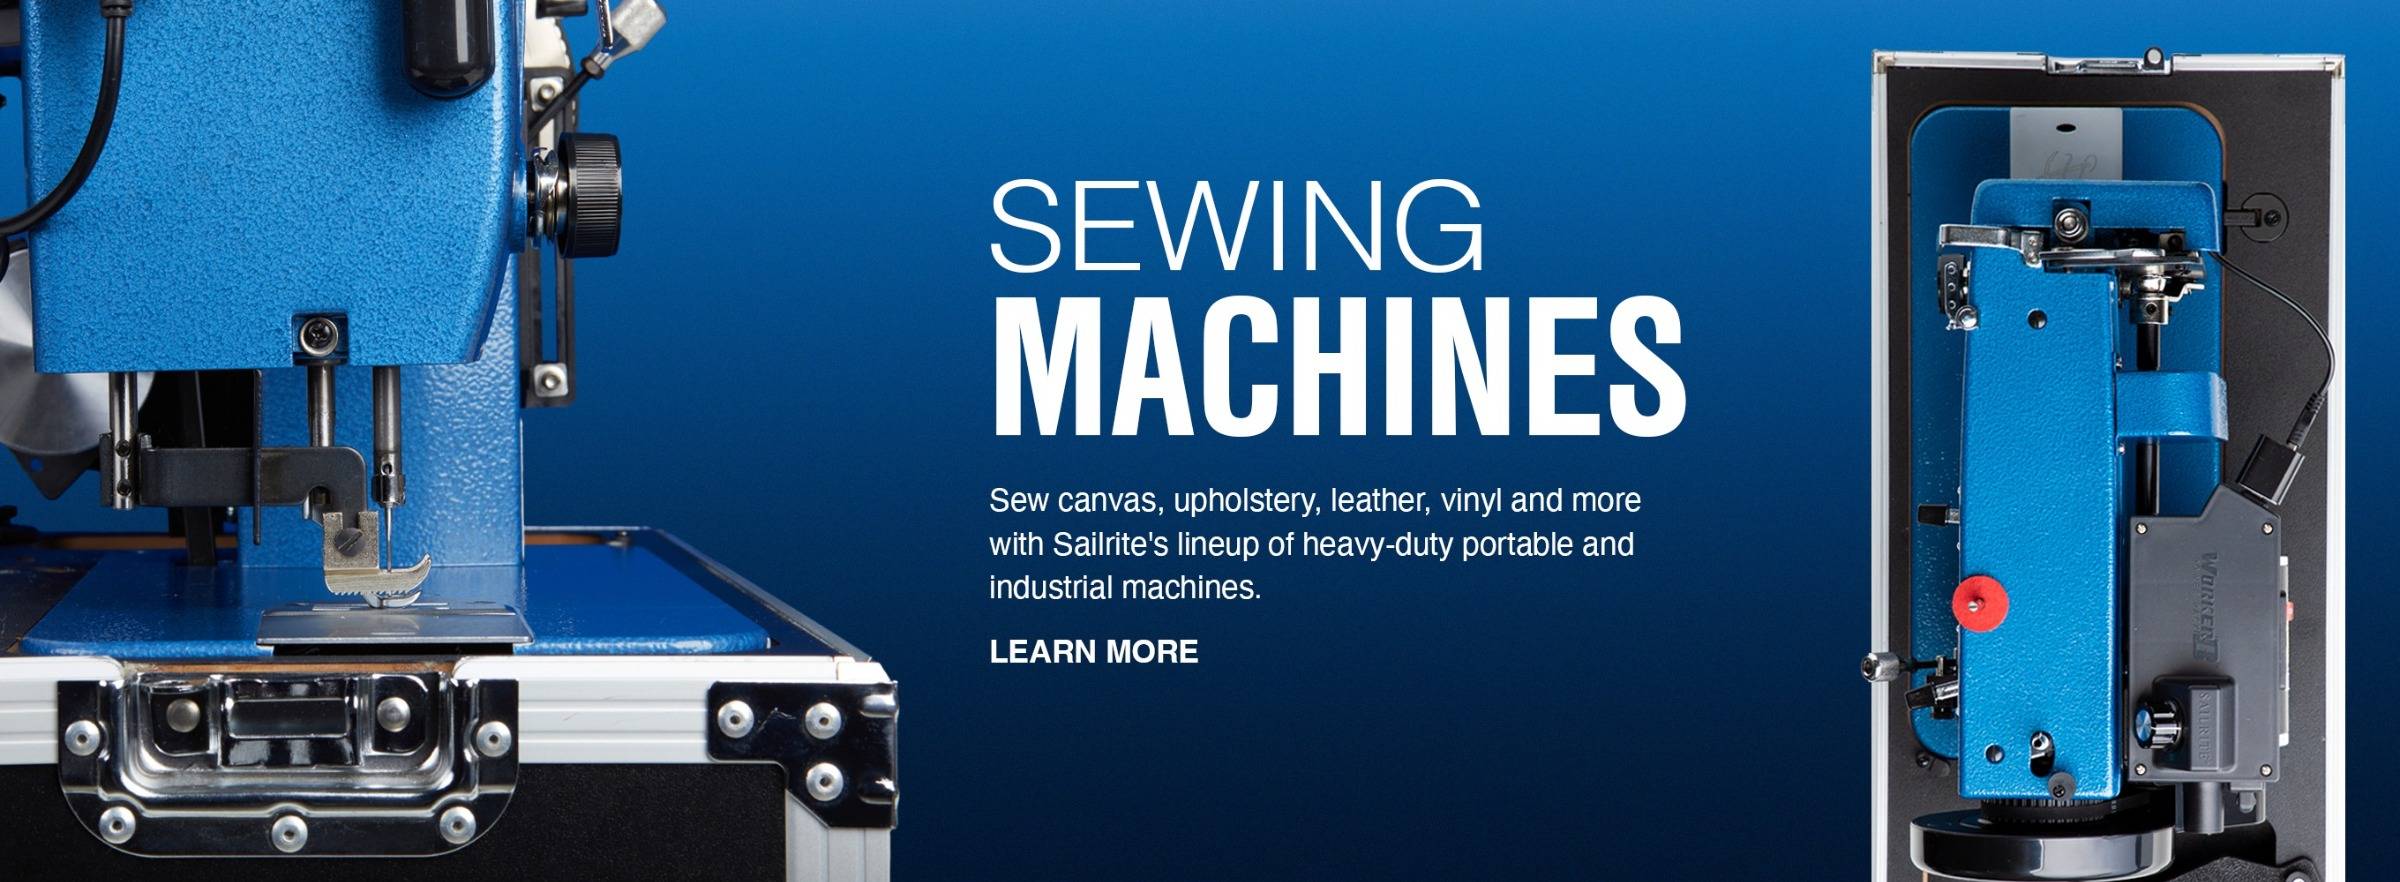 sailrite sewing machines banner